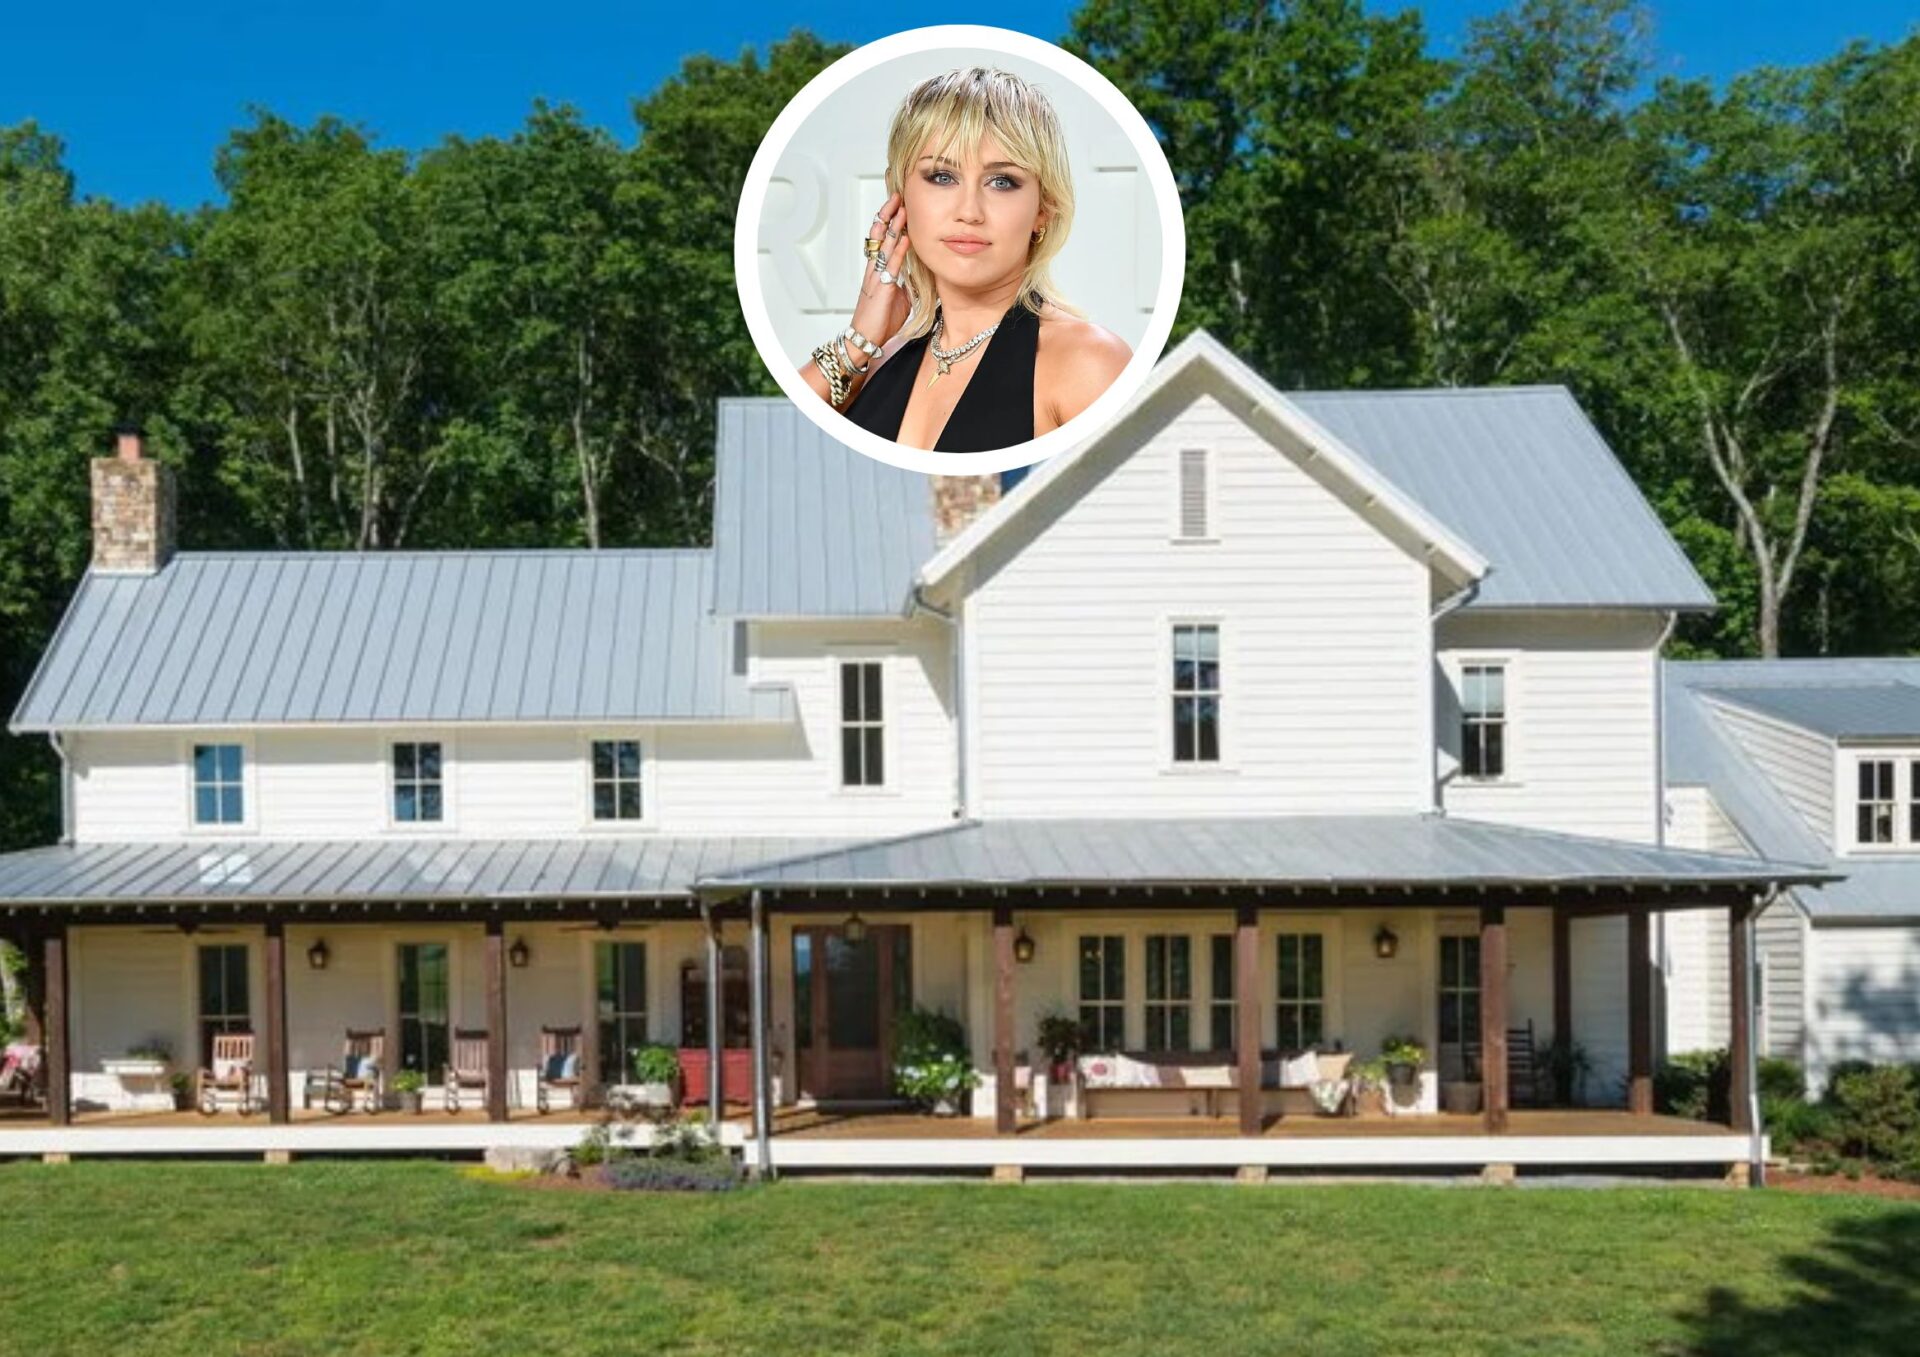 Main Image of Miley Cyrus's Nashville Ranch